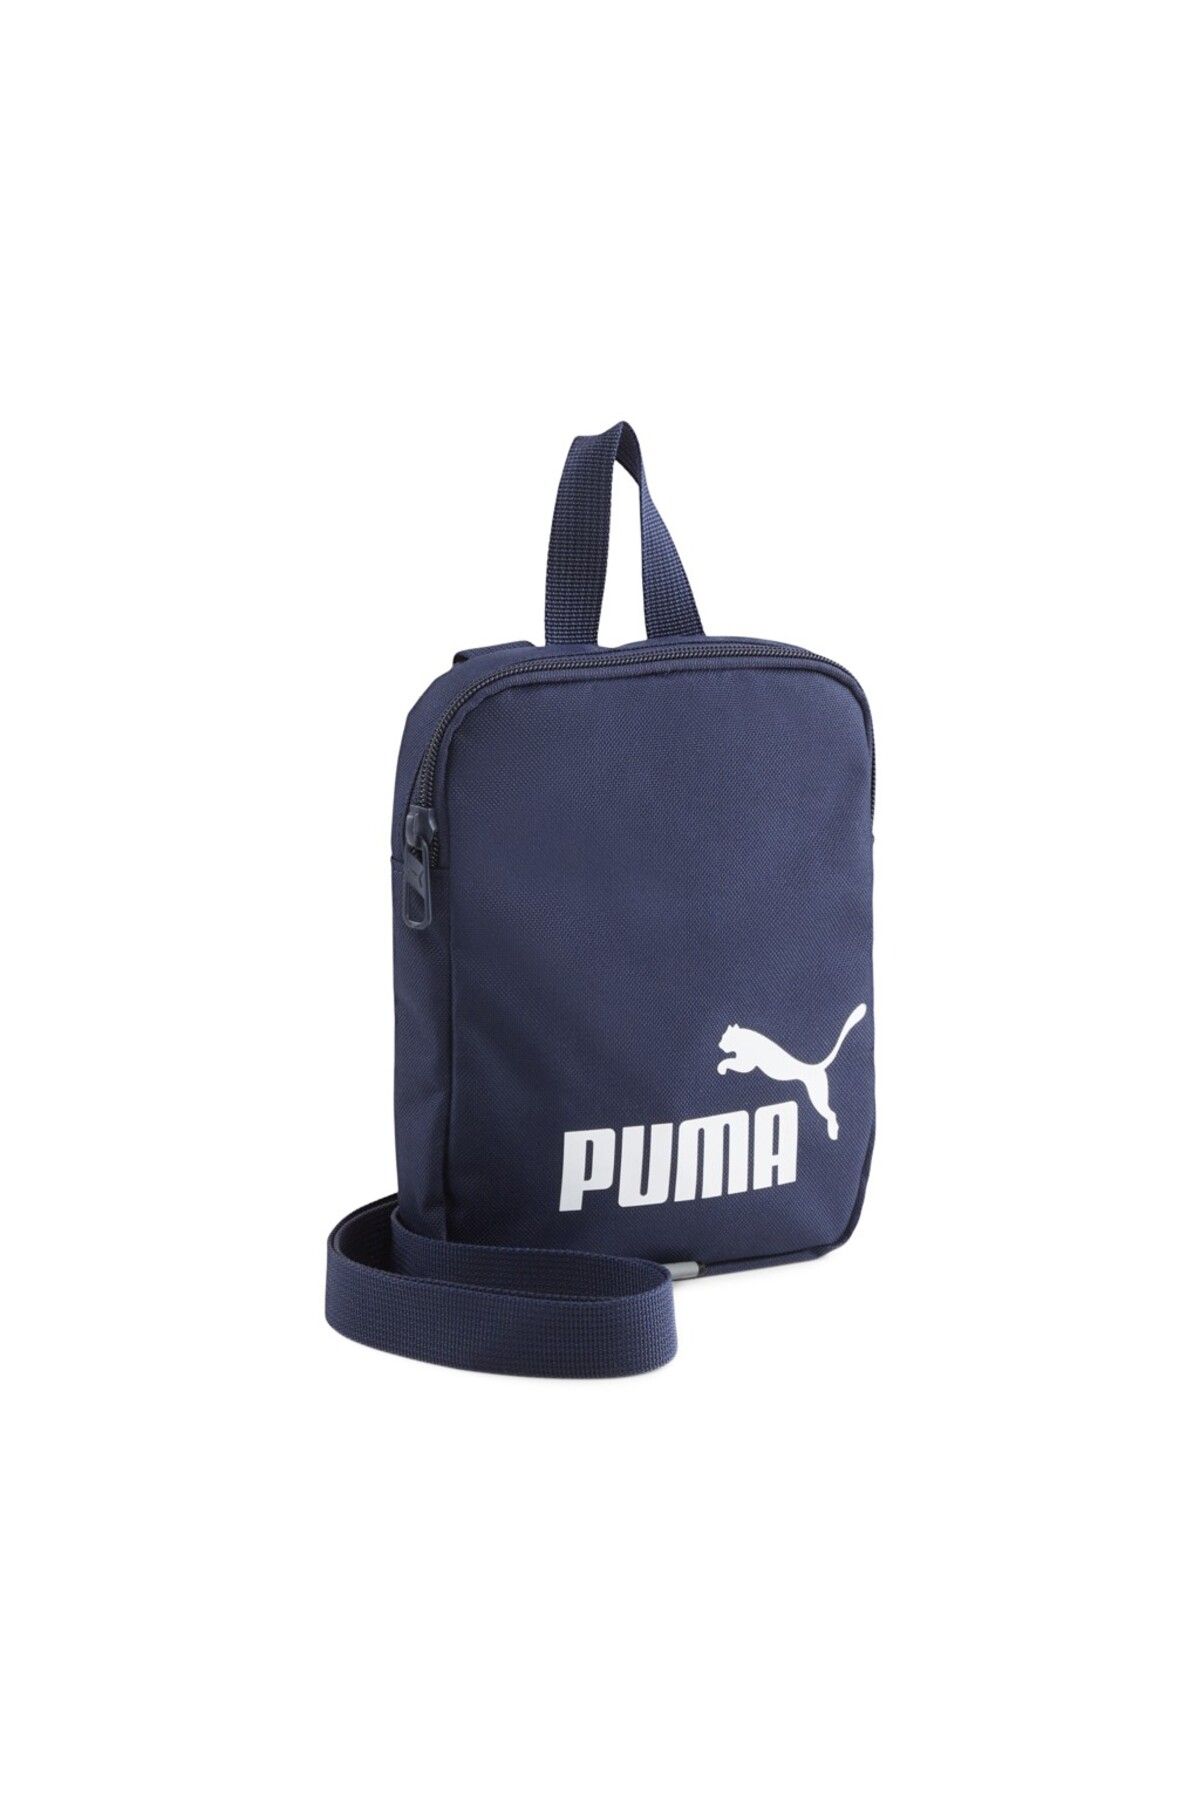 Puma Phase Portable07995502